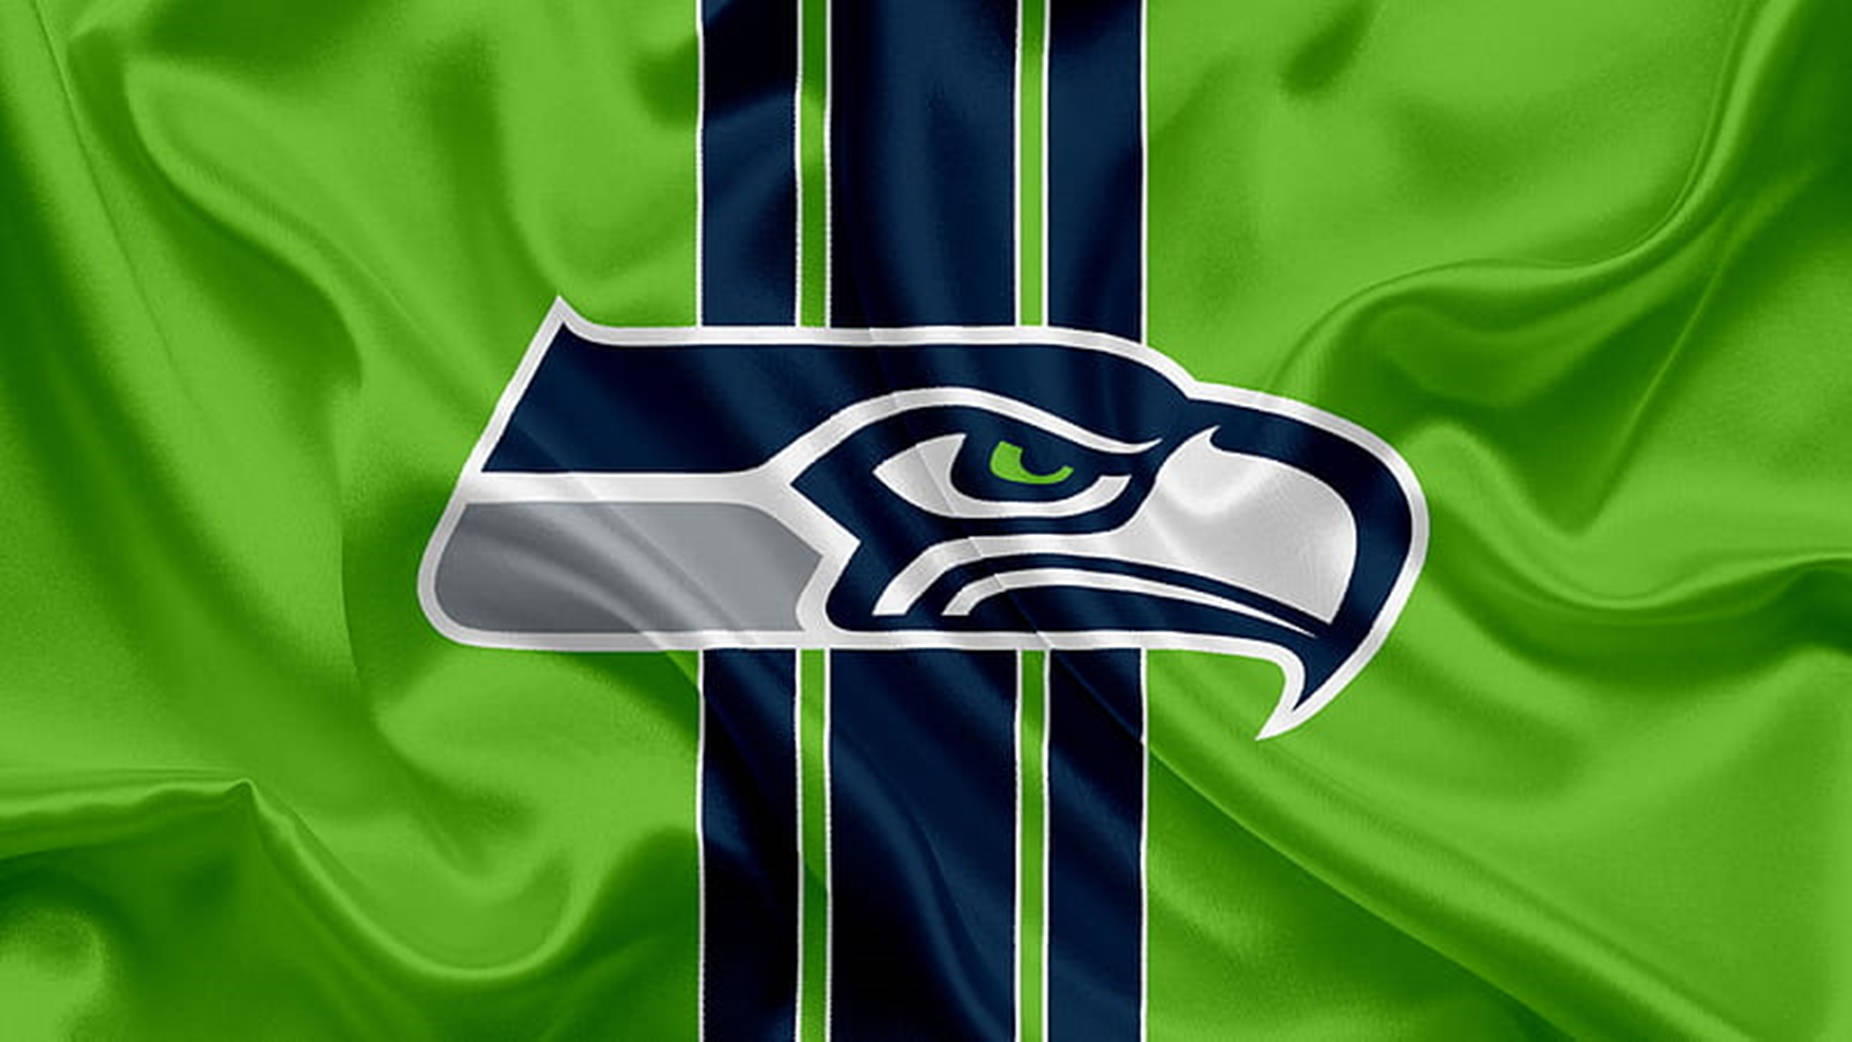 Seattleseahawks Logo Wellenförmige Grüne Fahne Wallpaper